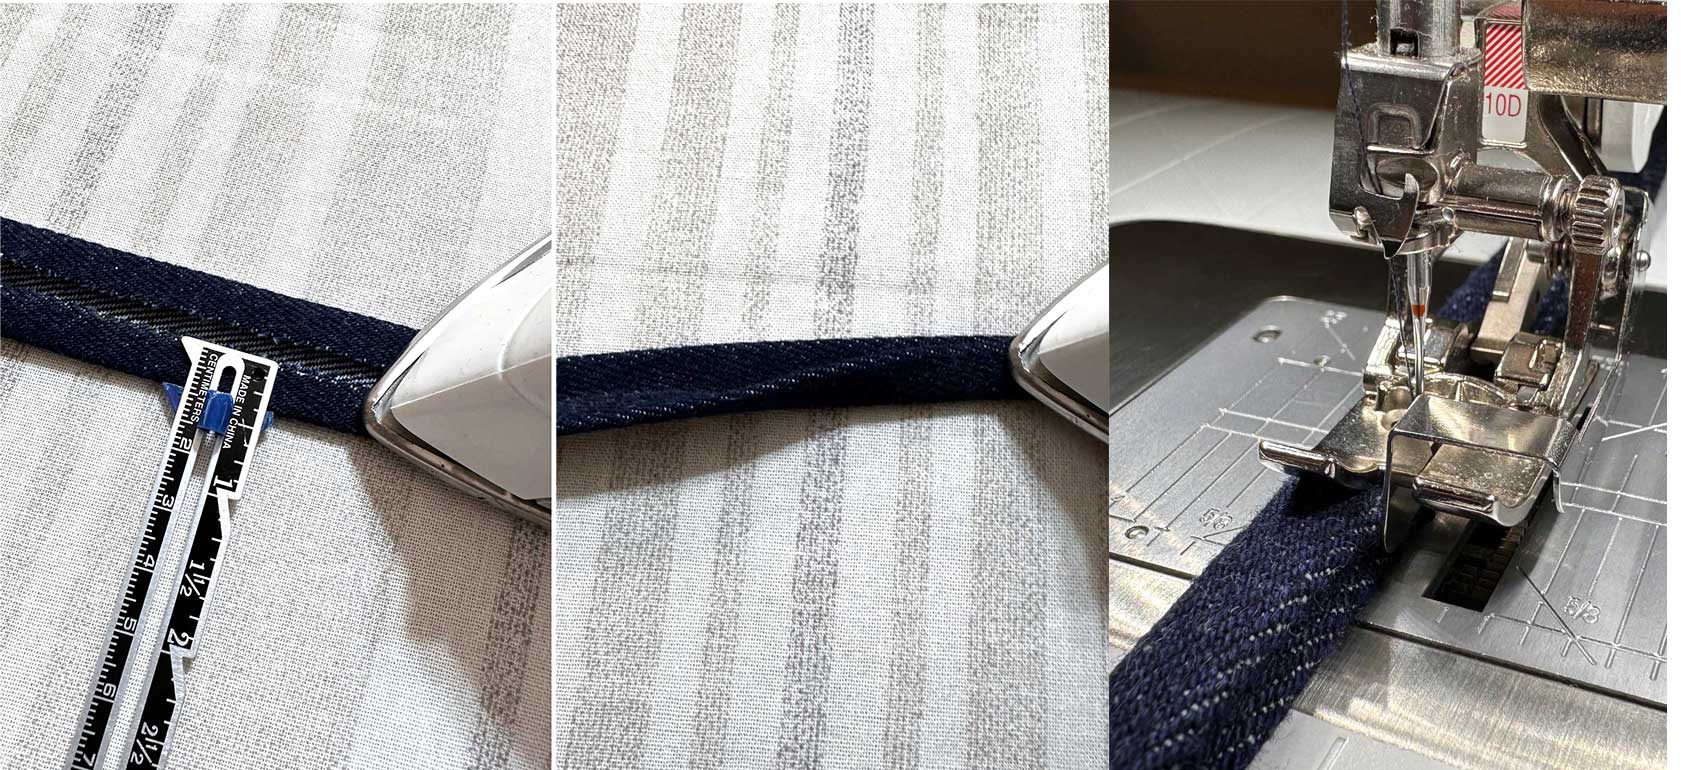 Tutorial: How to Sew a Pincushion Wristband - WeAllSew